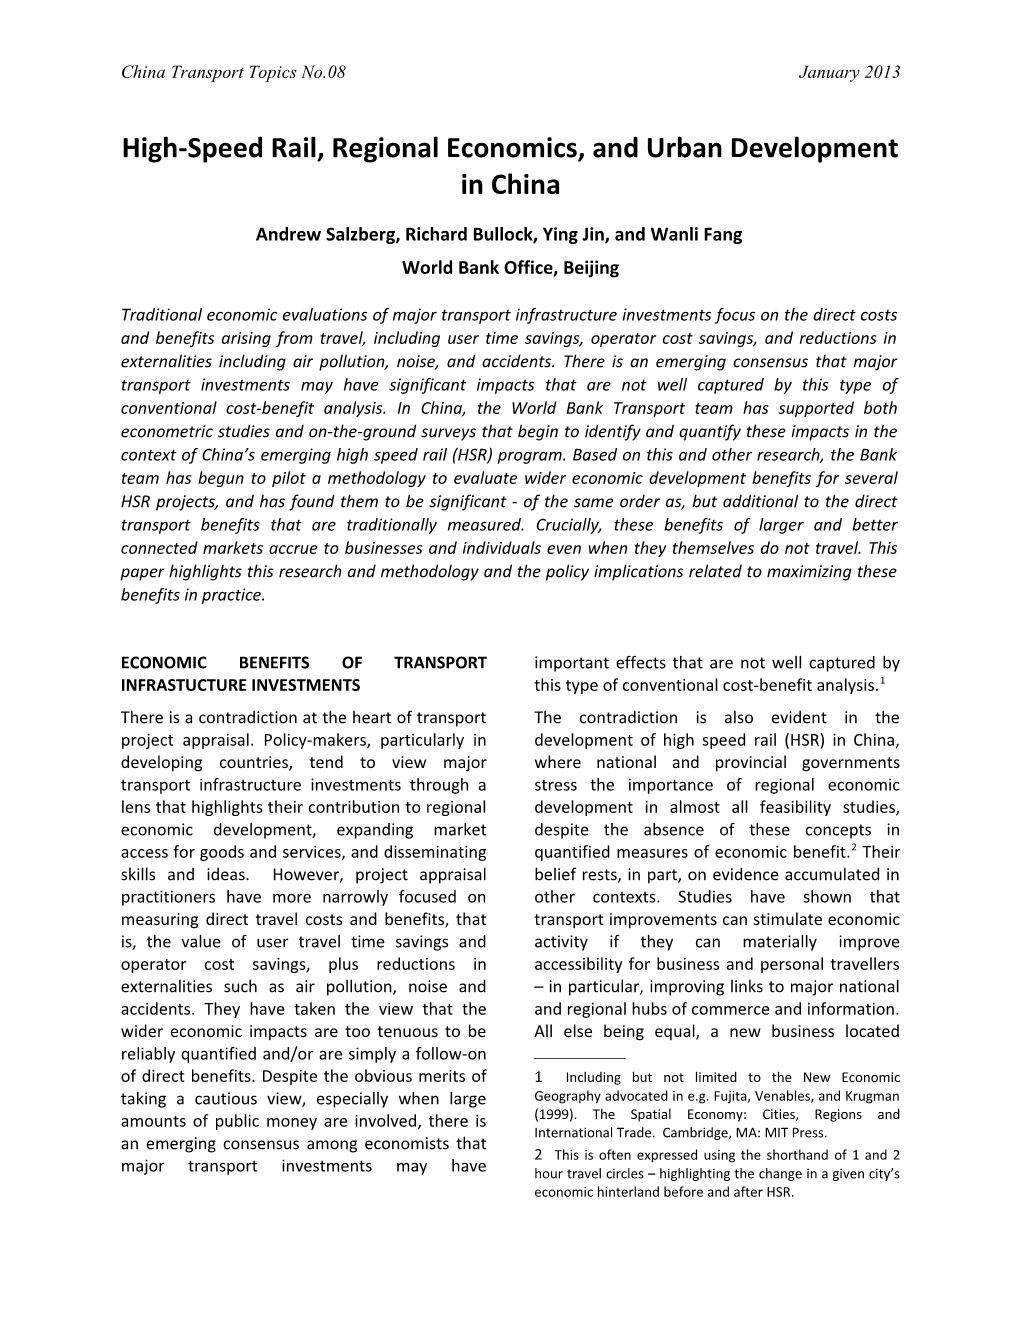 High-Speed Rail, Regional Economics, and Urban Development in China